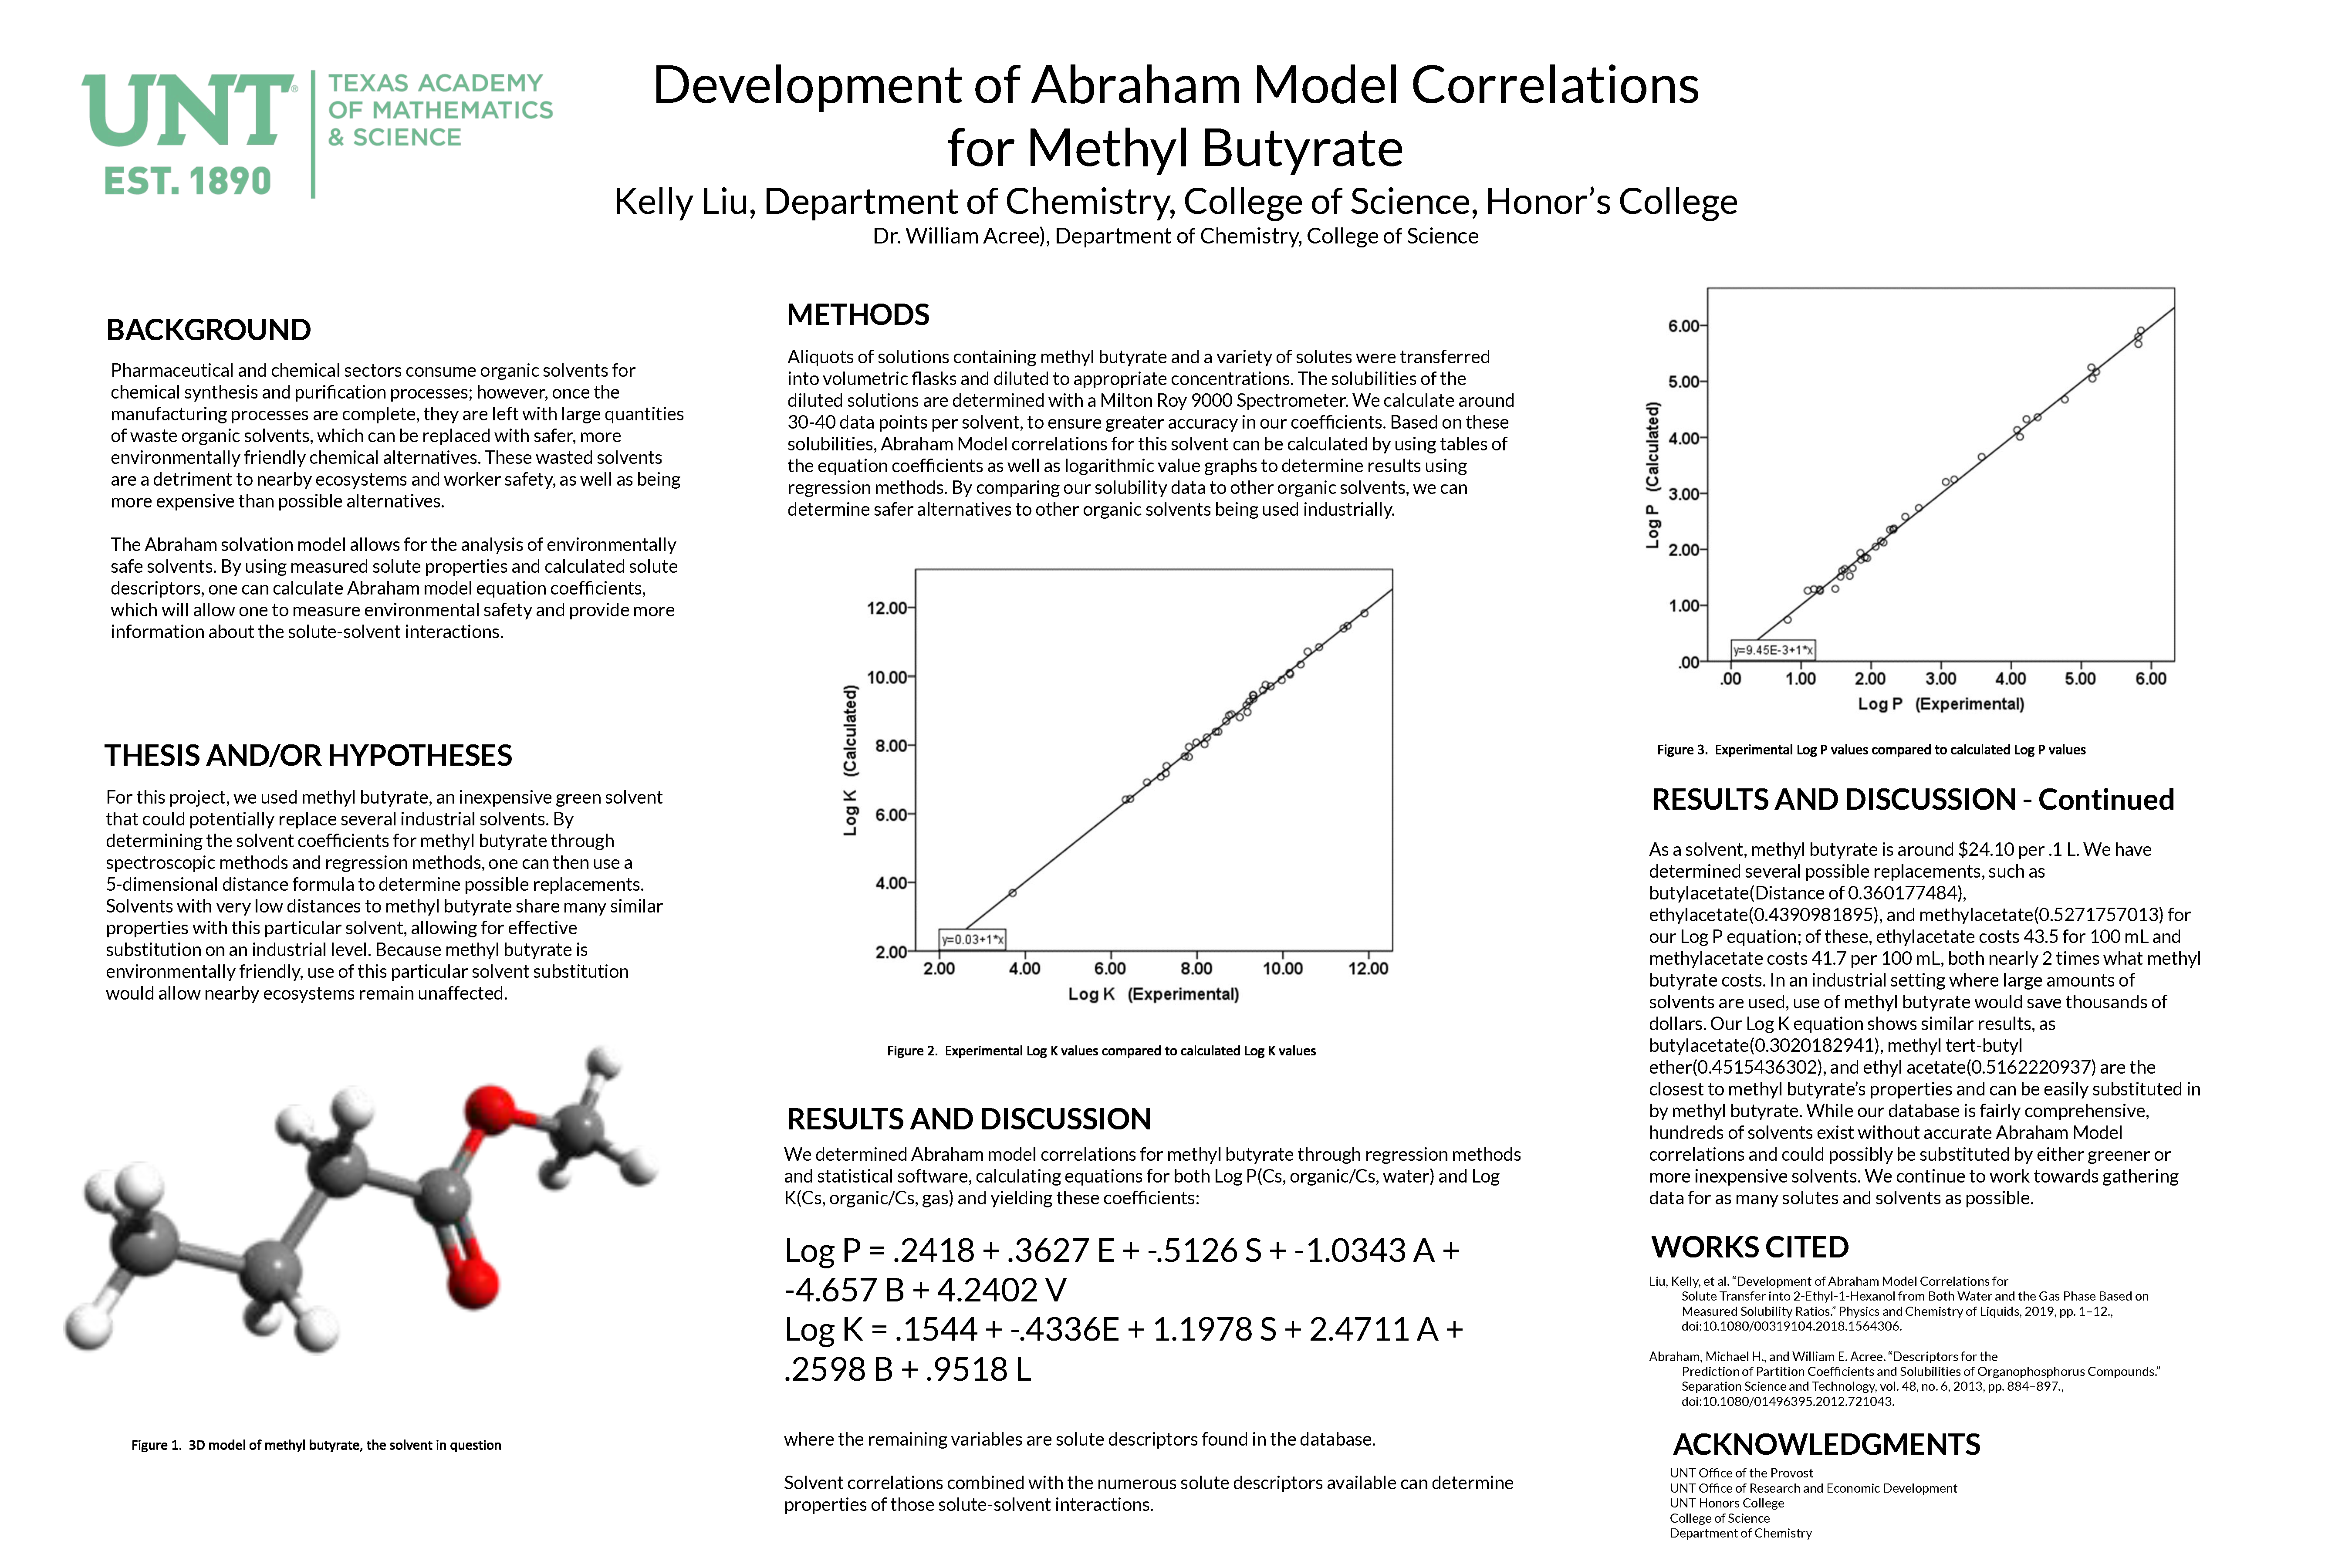 Development of Abraham Model Correlations for Methyl Butyrate